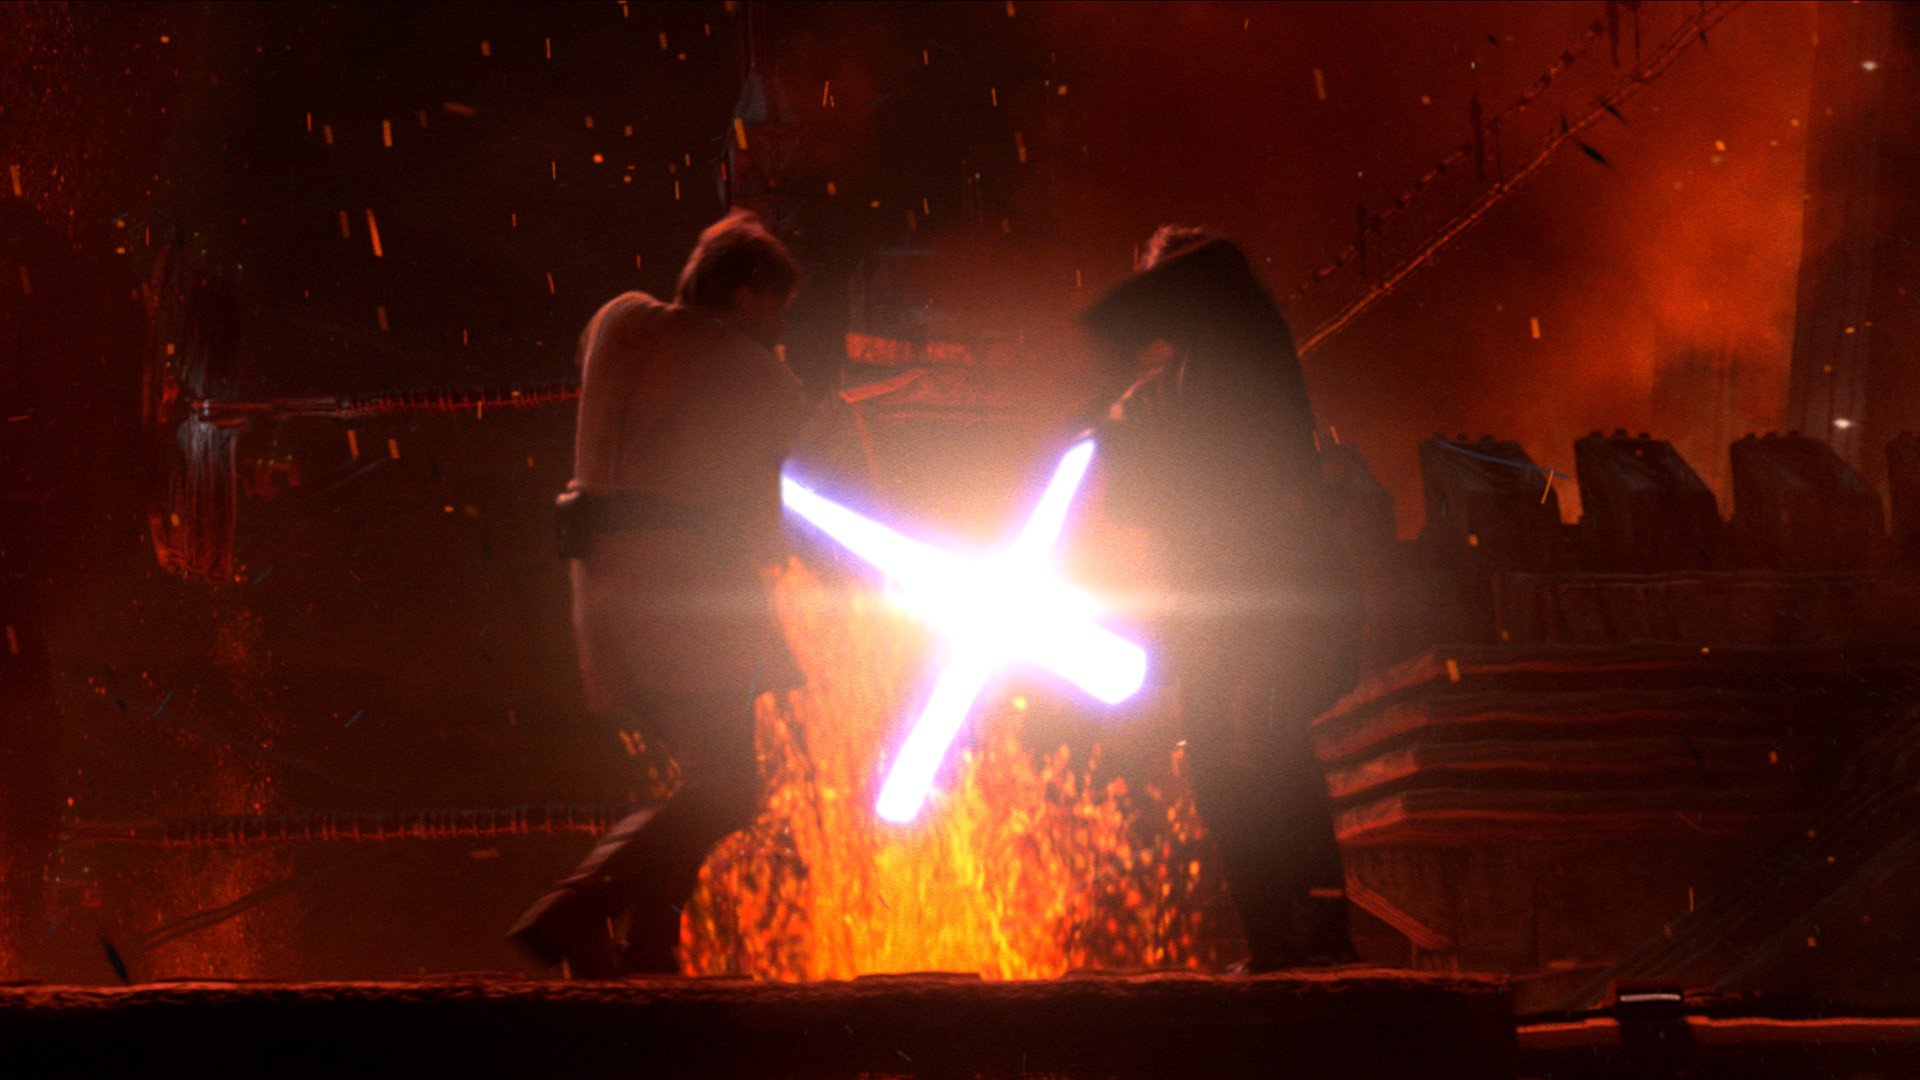 Star Wars: Episode III - Revenge of the Sith backdrop